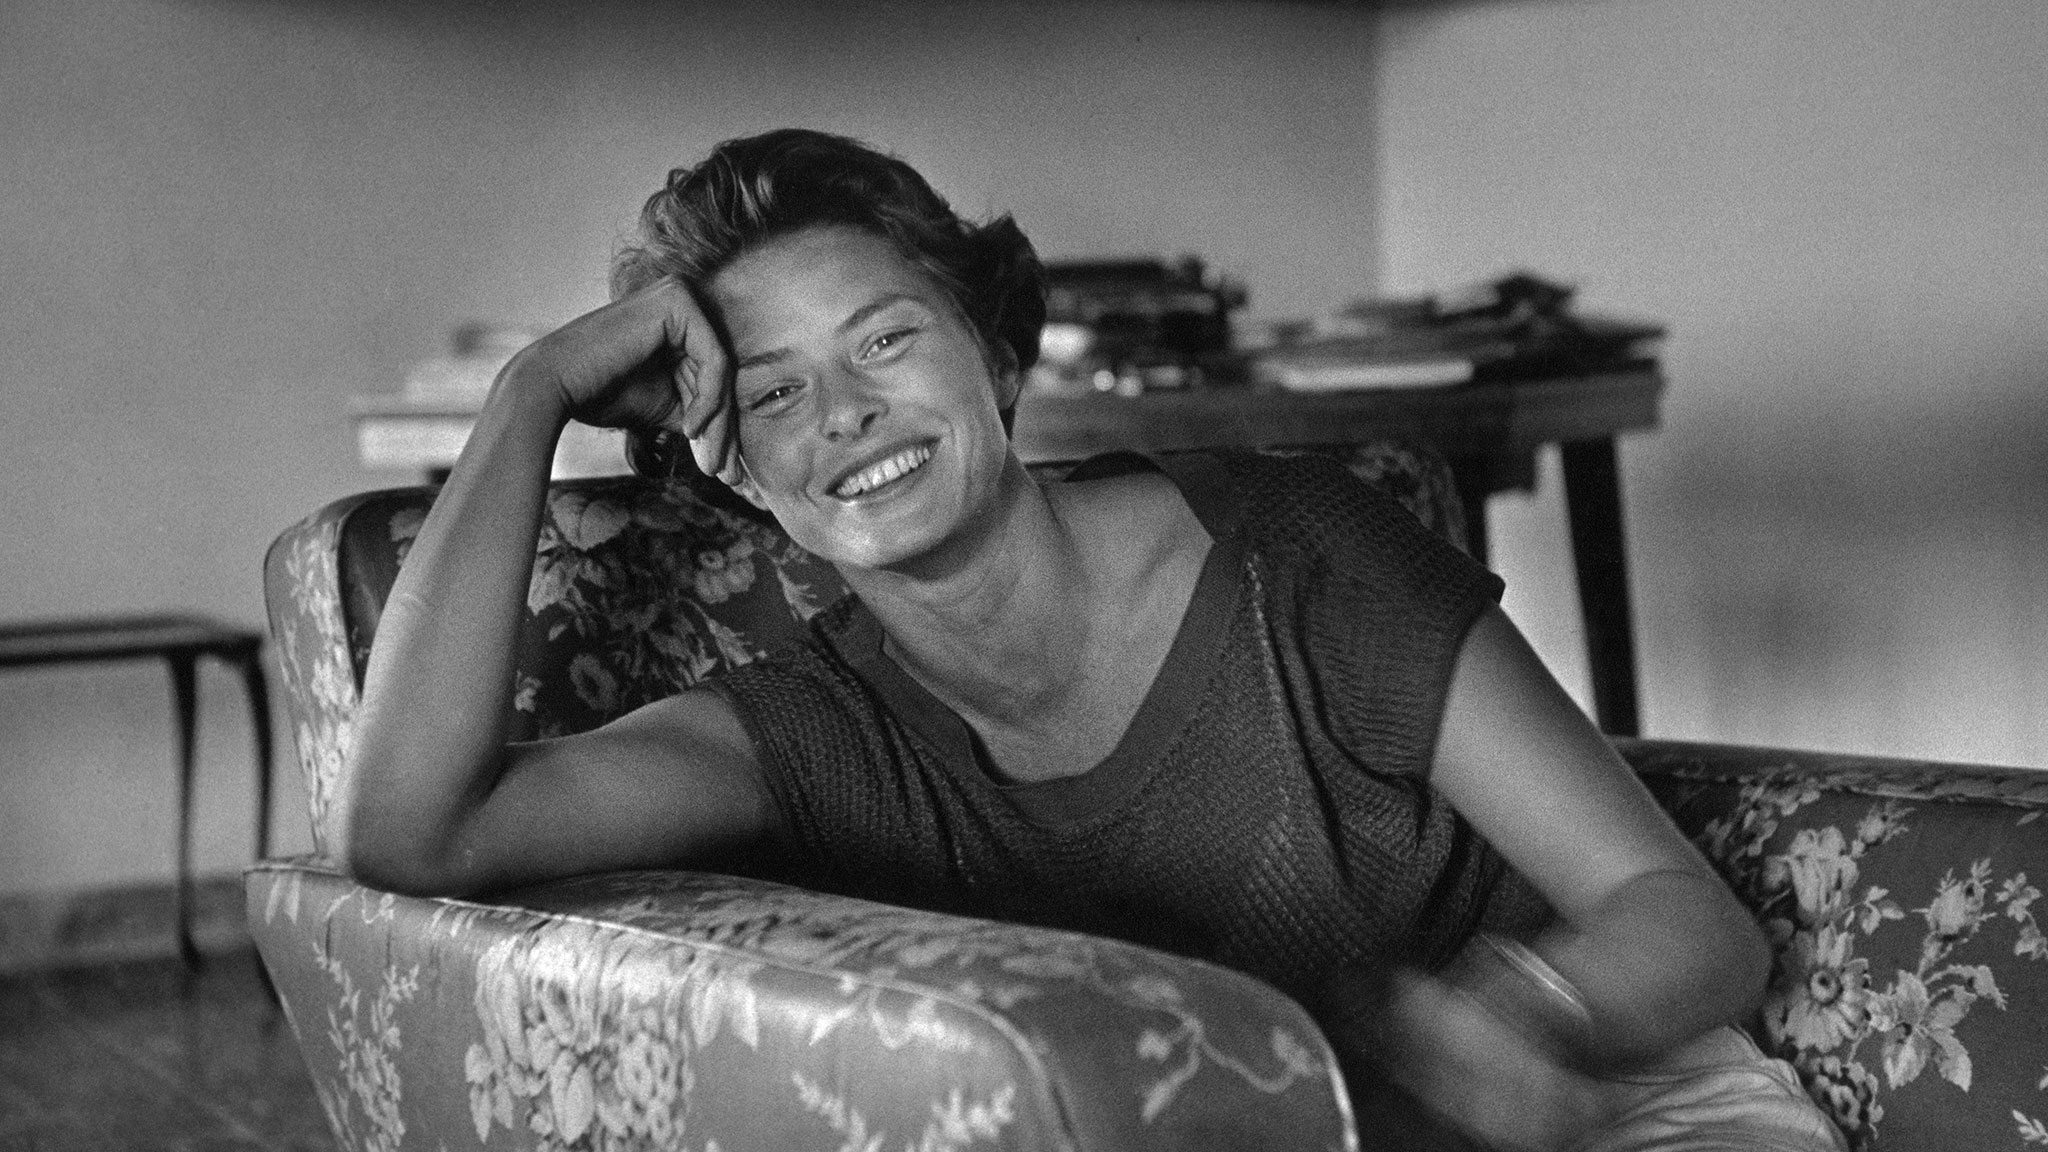 Ingrid Bergman Wallpapers